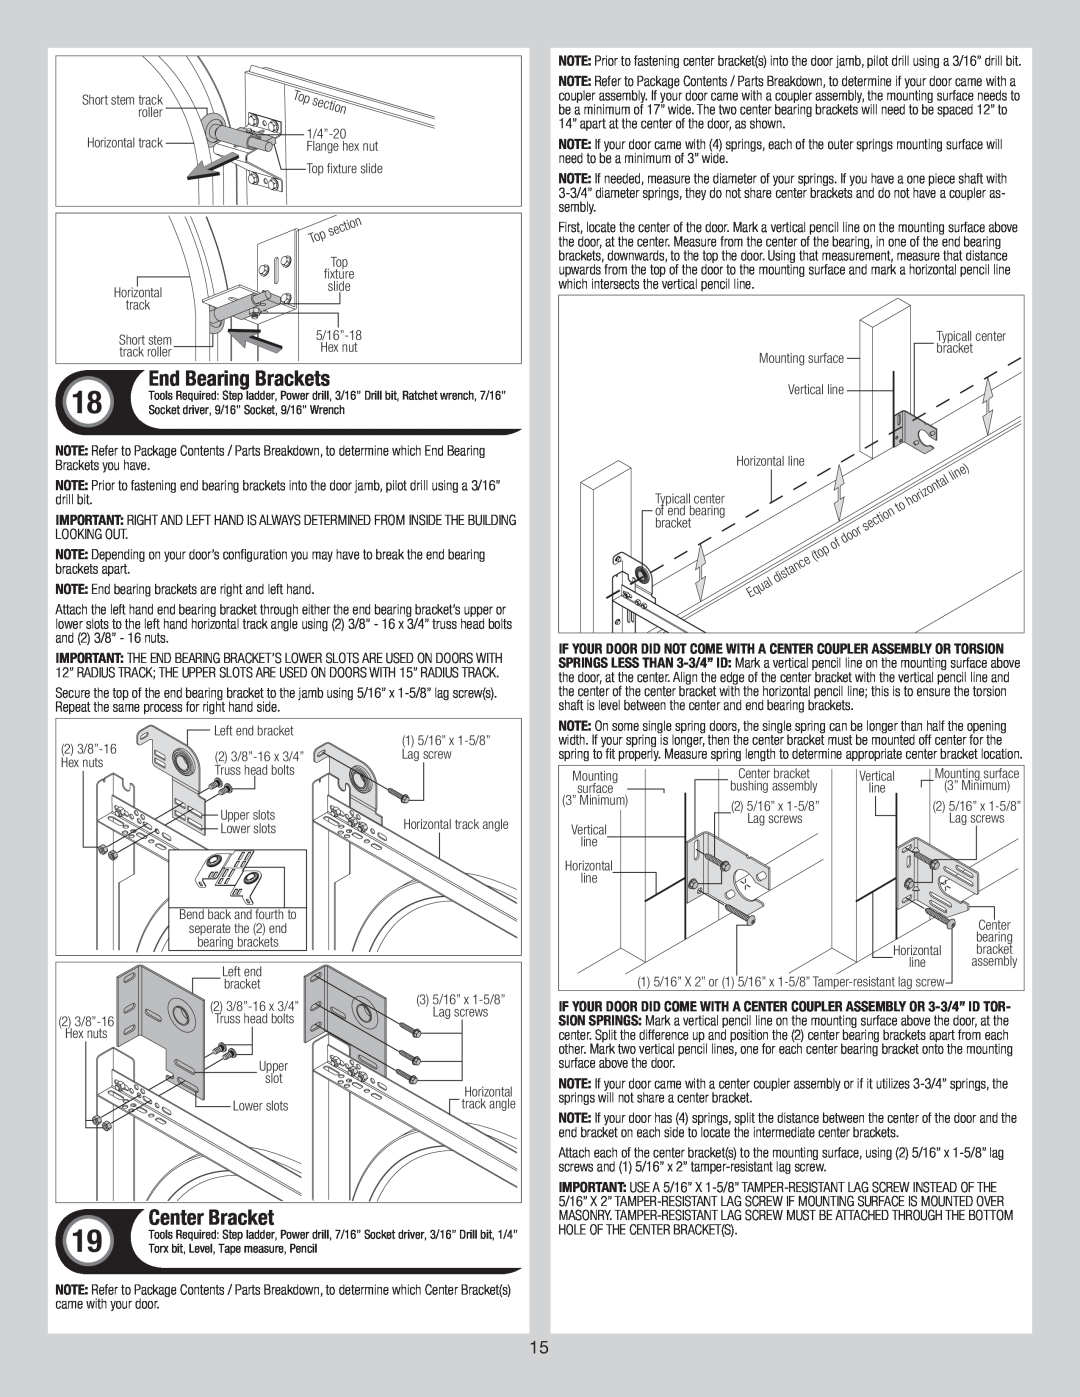 Wayne-Dalton 8300/8500 installation instructions End Bearing Brackets, Center Bracket, section 